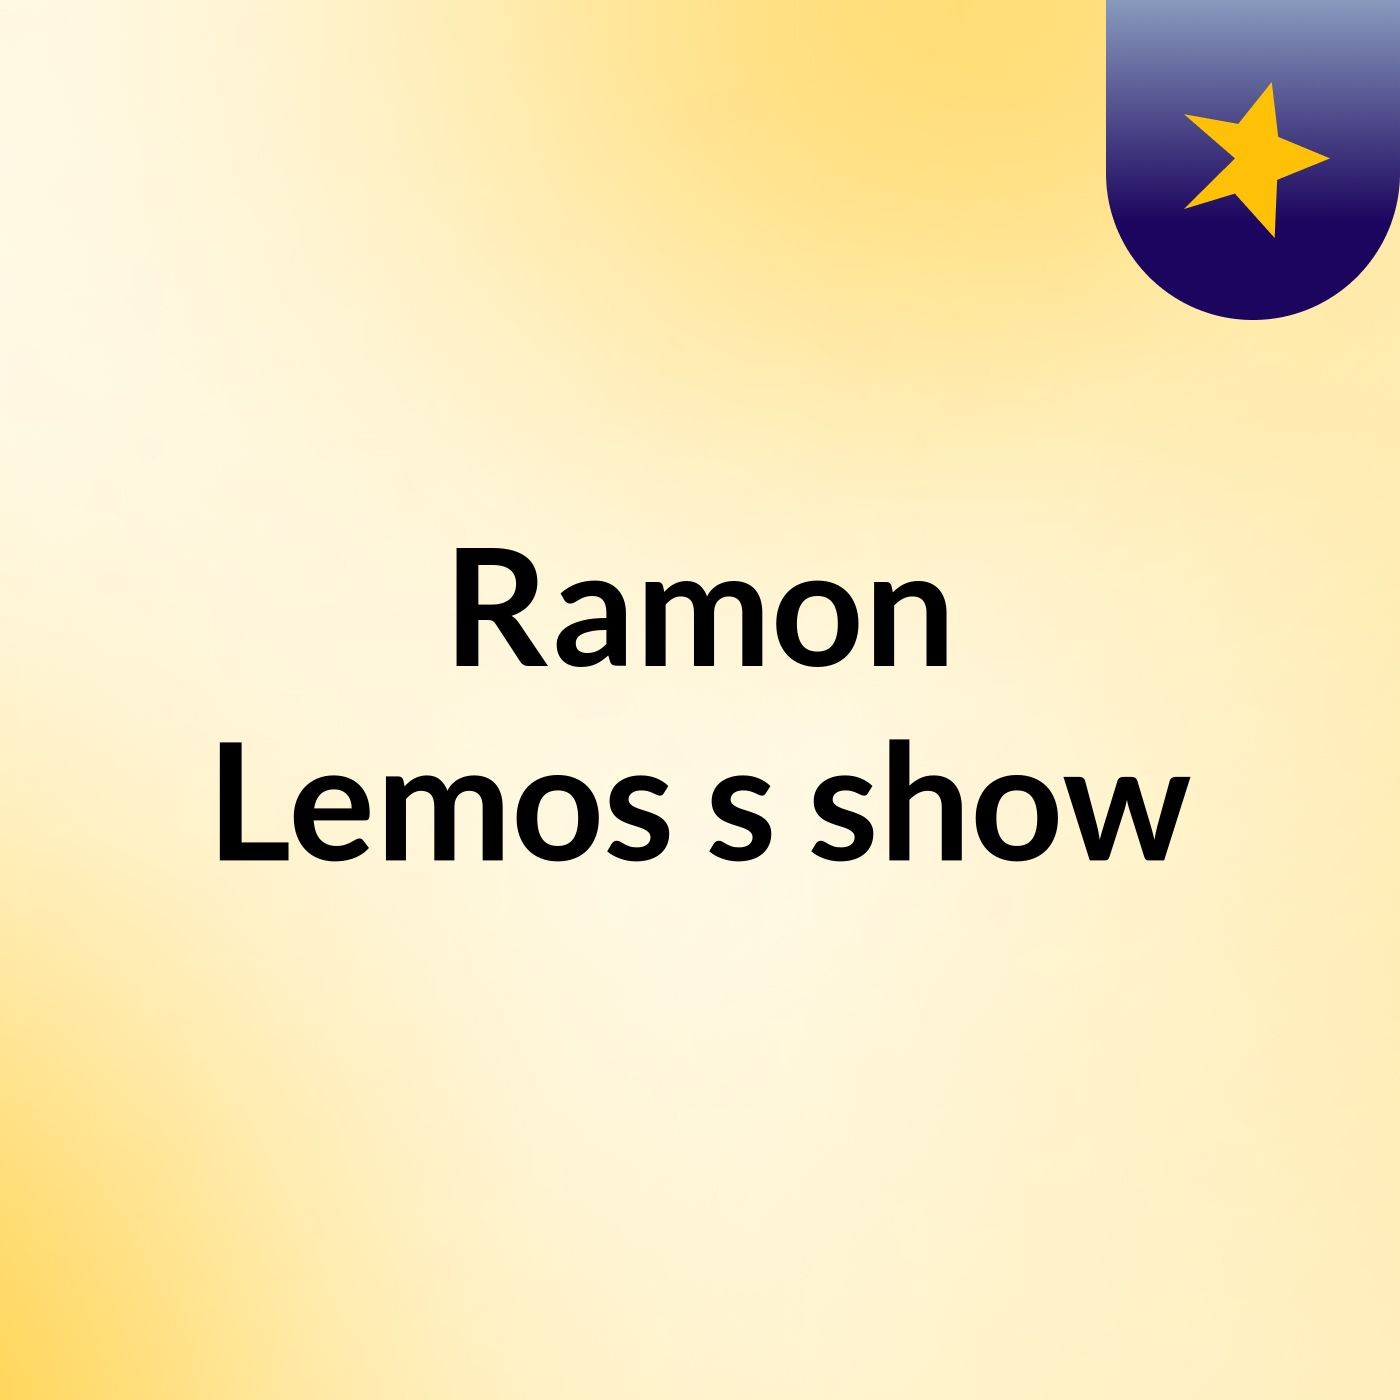 Ramon Lemos's show